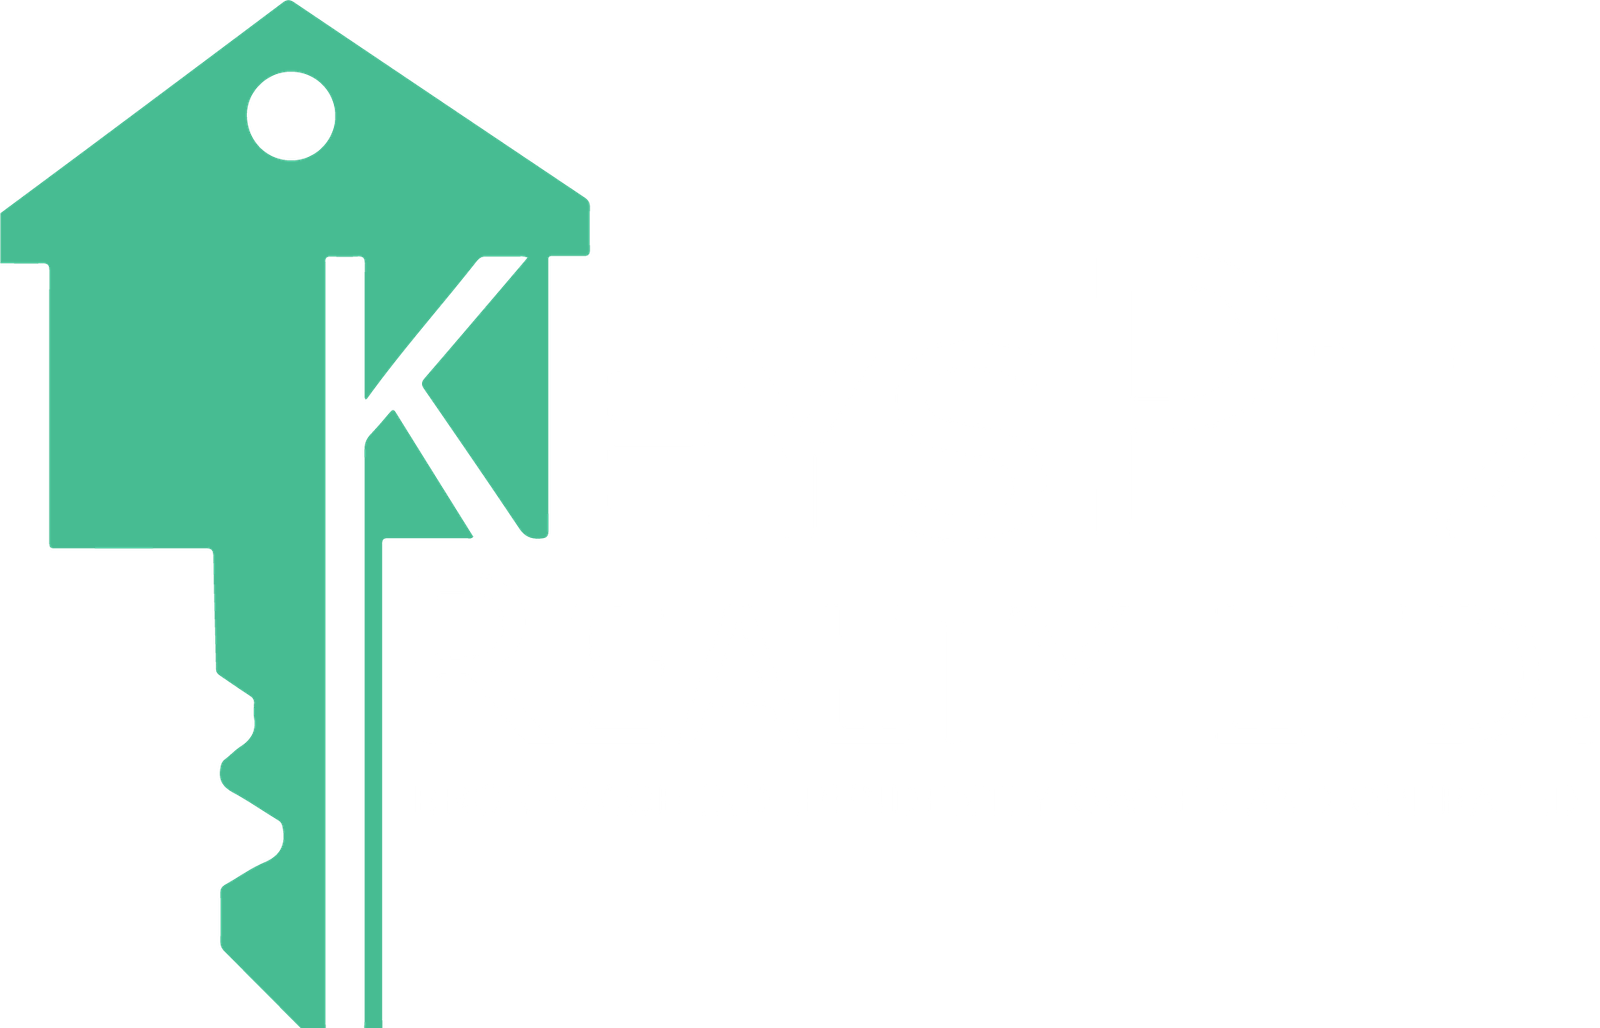 Keysplz logo in green and white